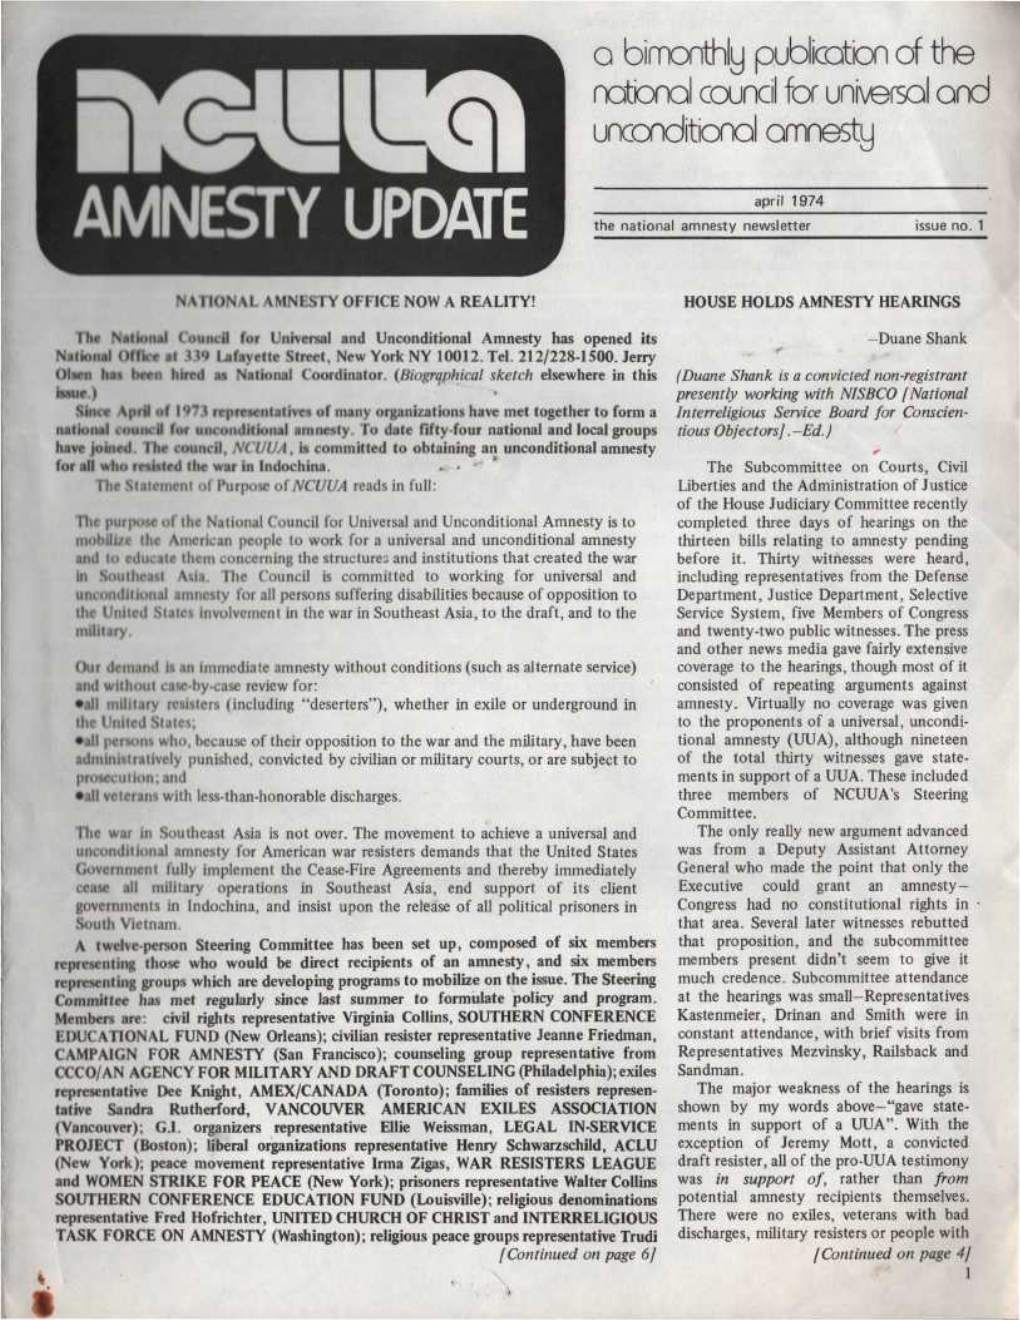 AMNESTY UPDATE the National Amnesty Newsletter Issue No